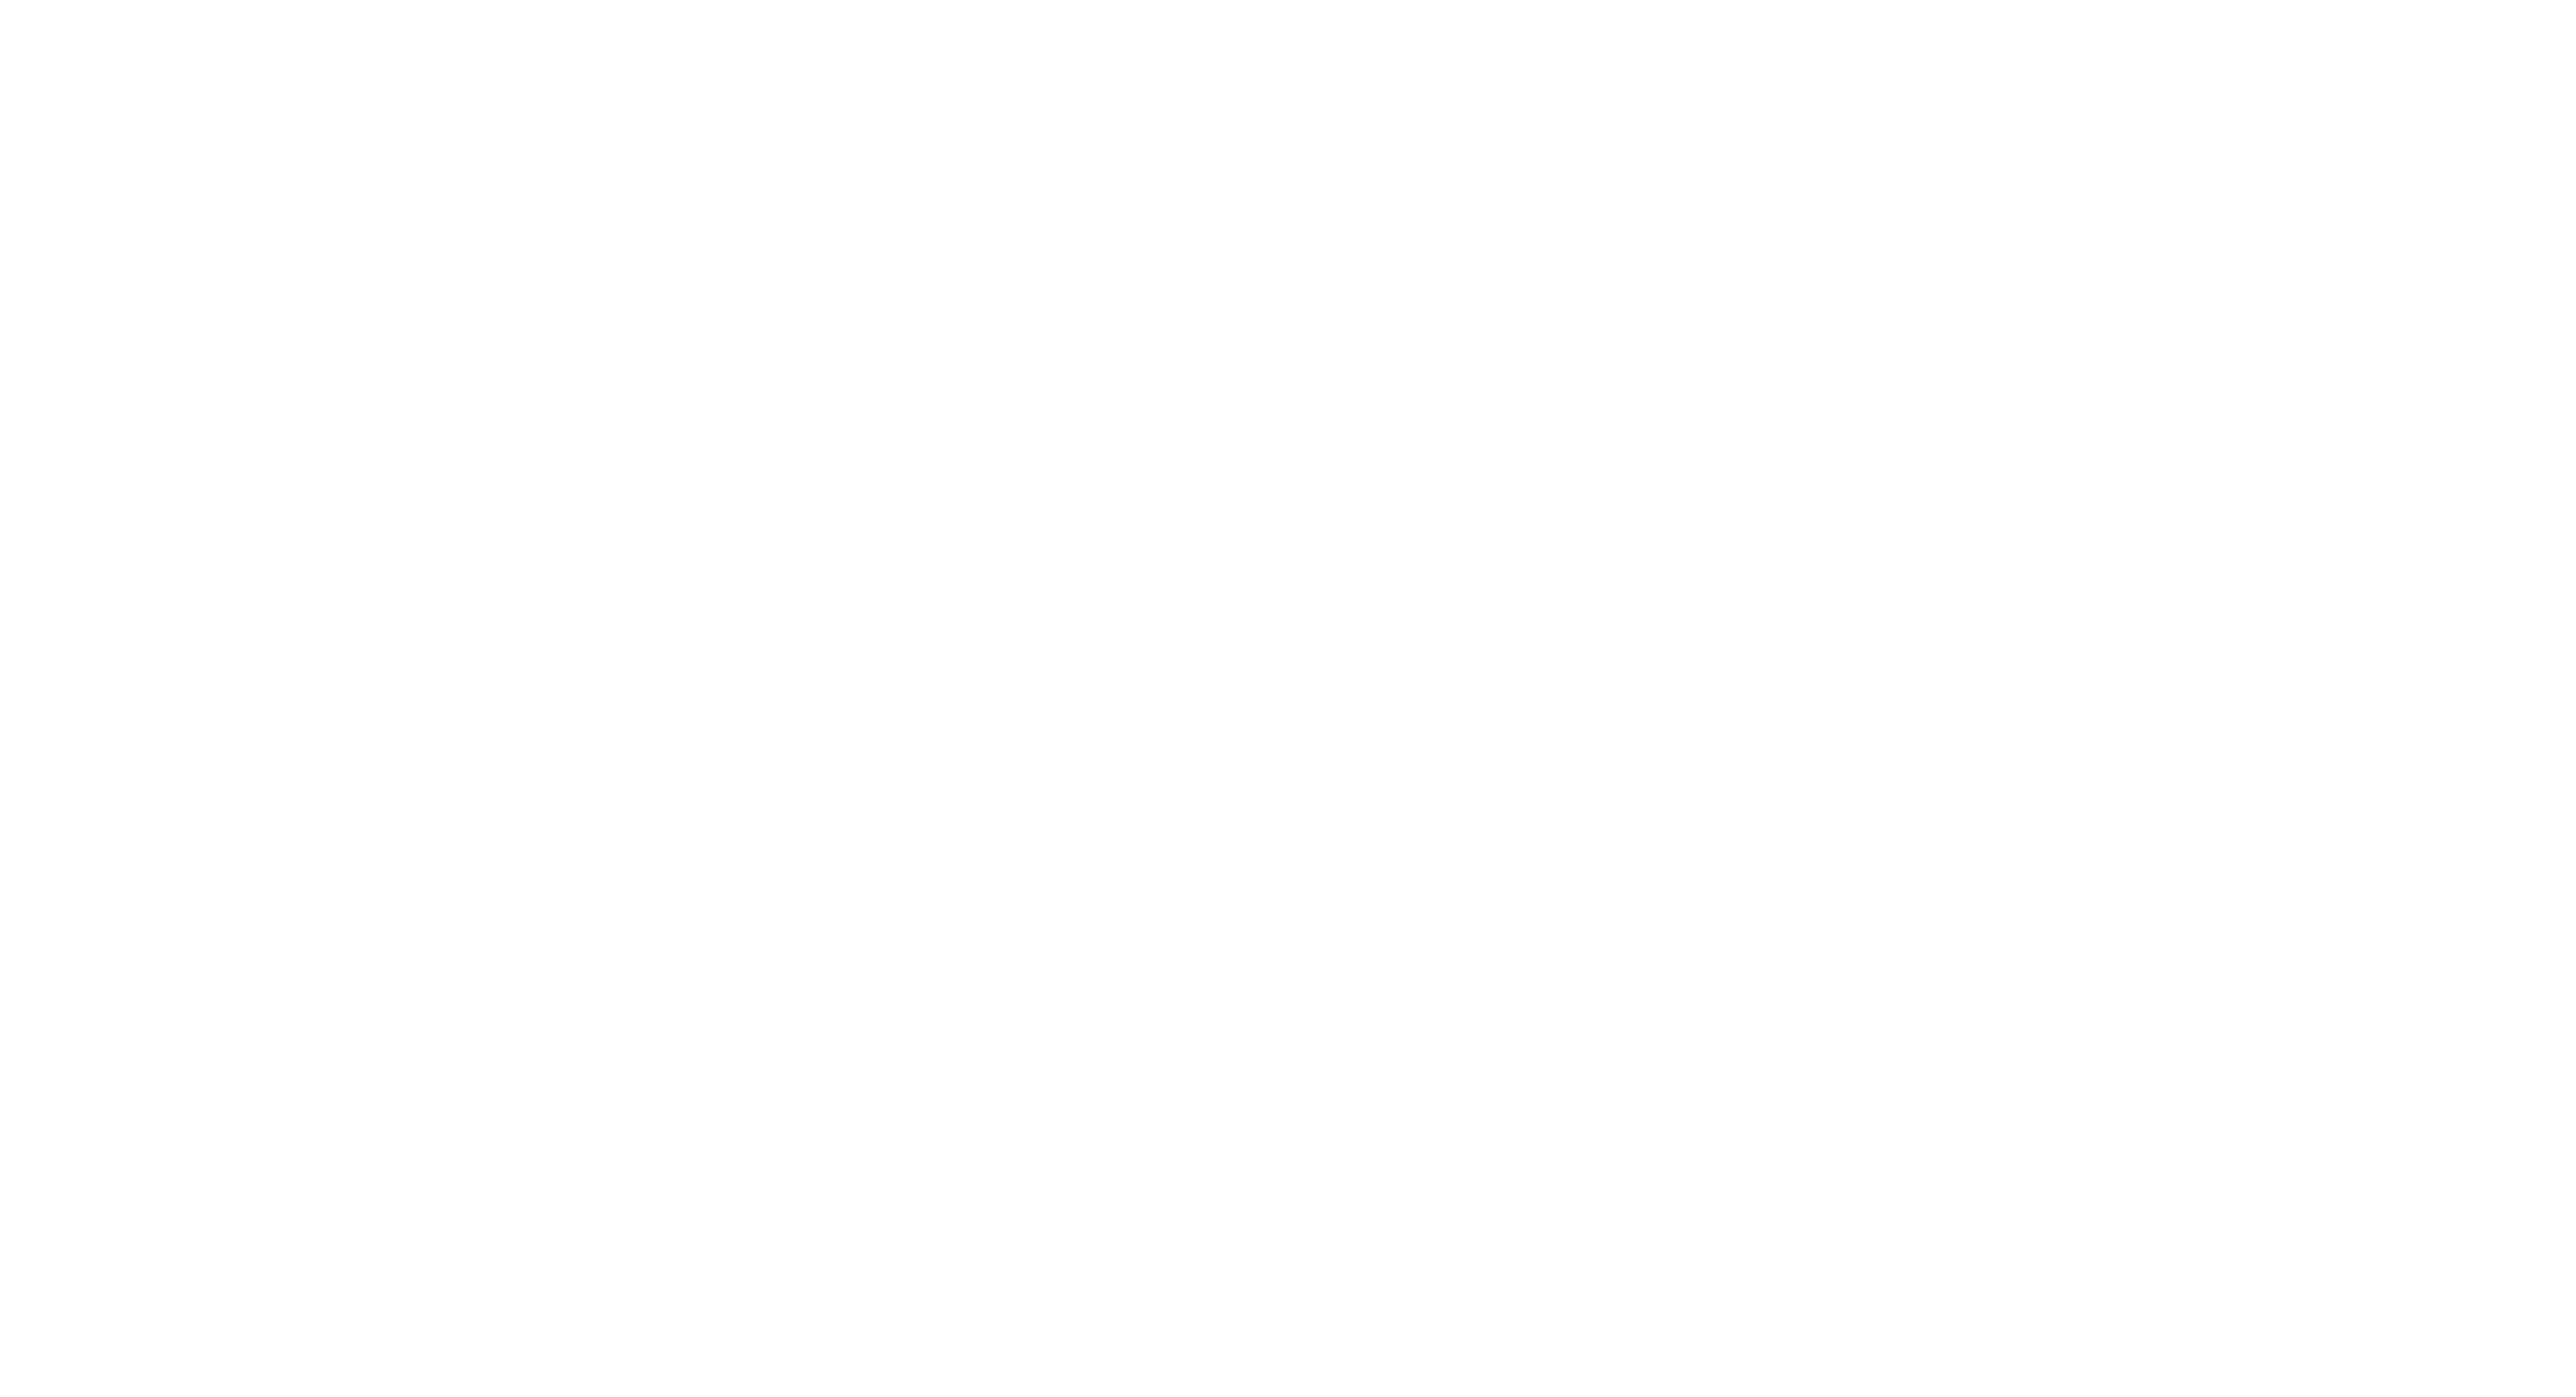 Alexa Digital